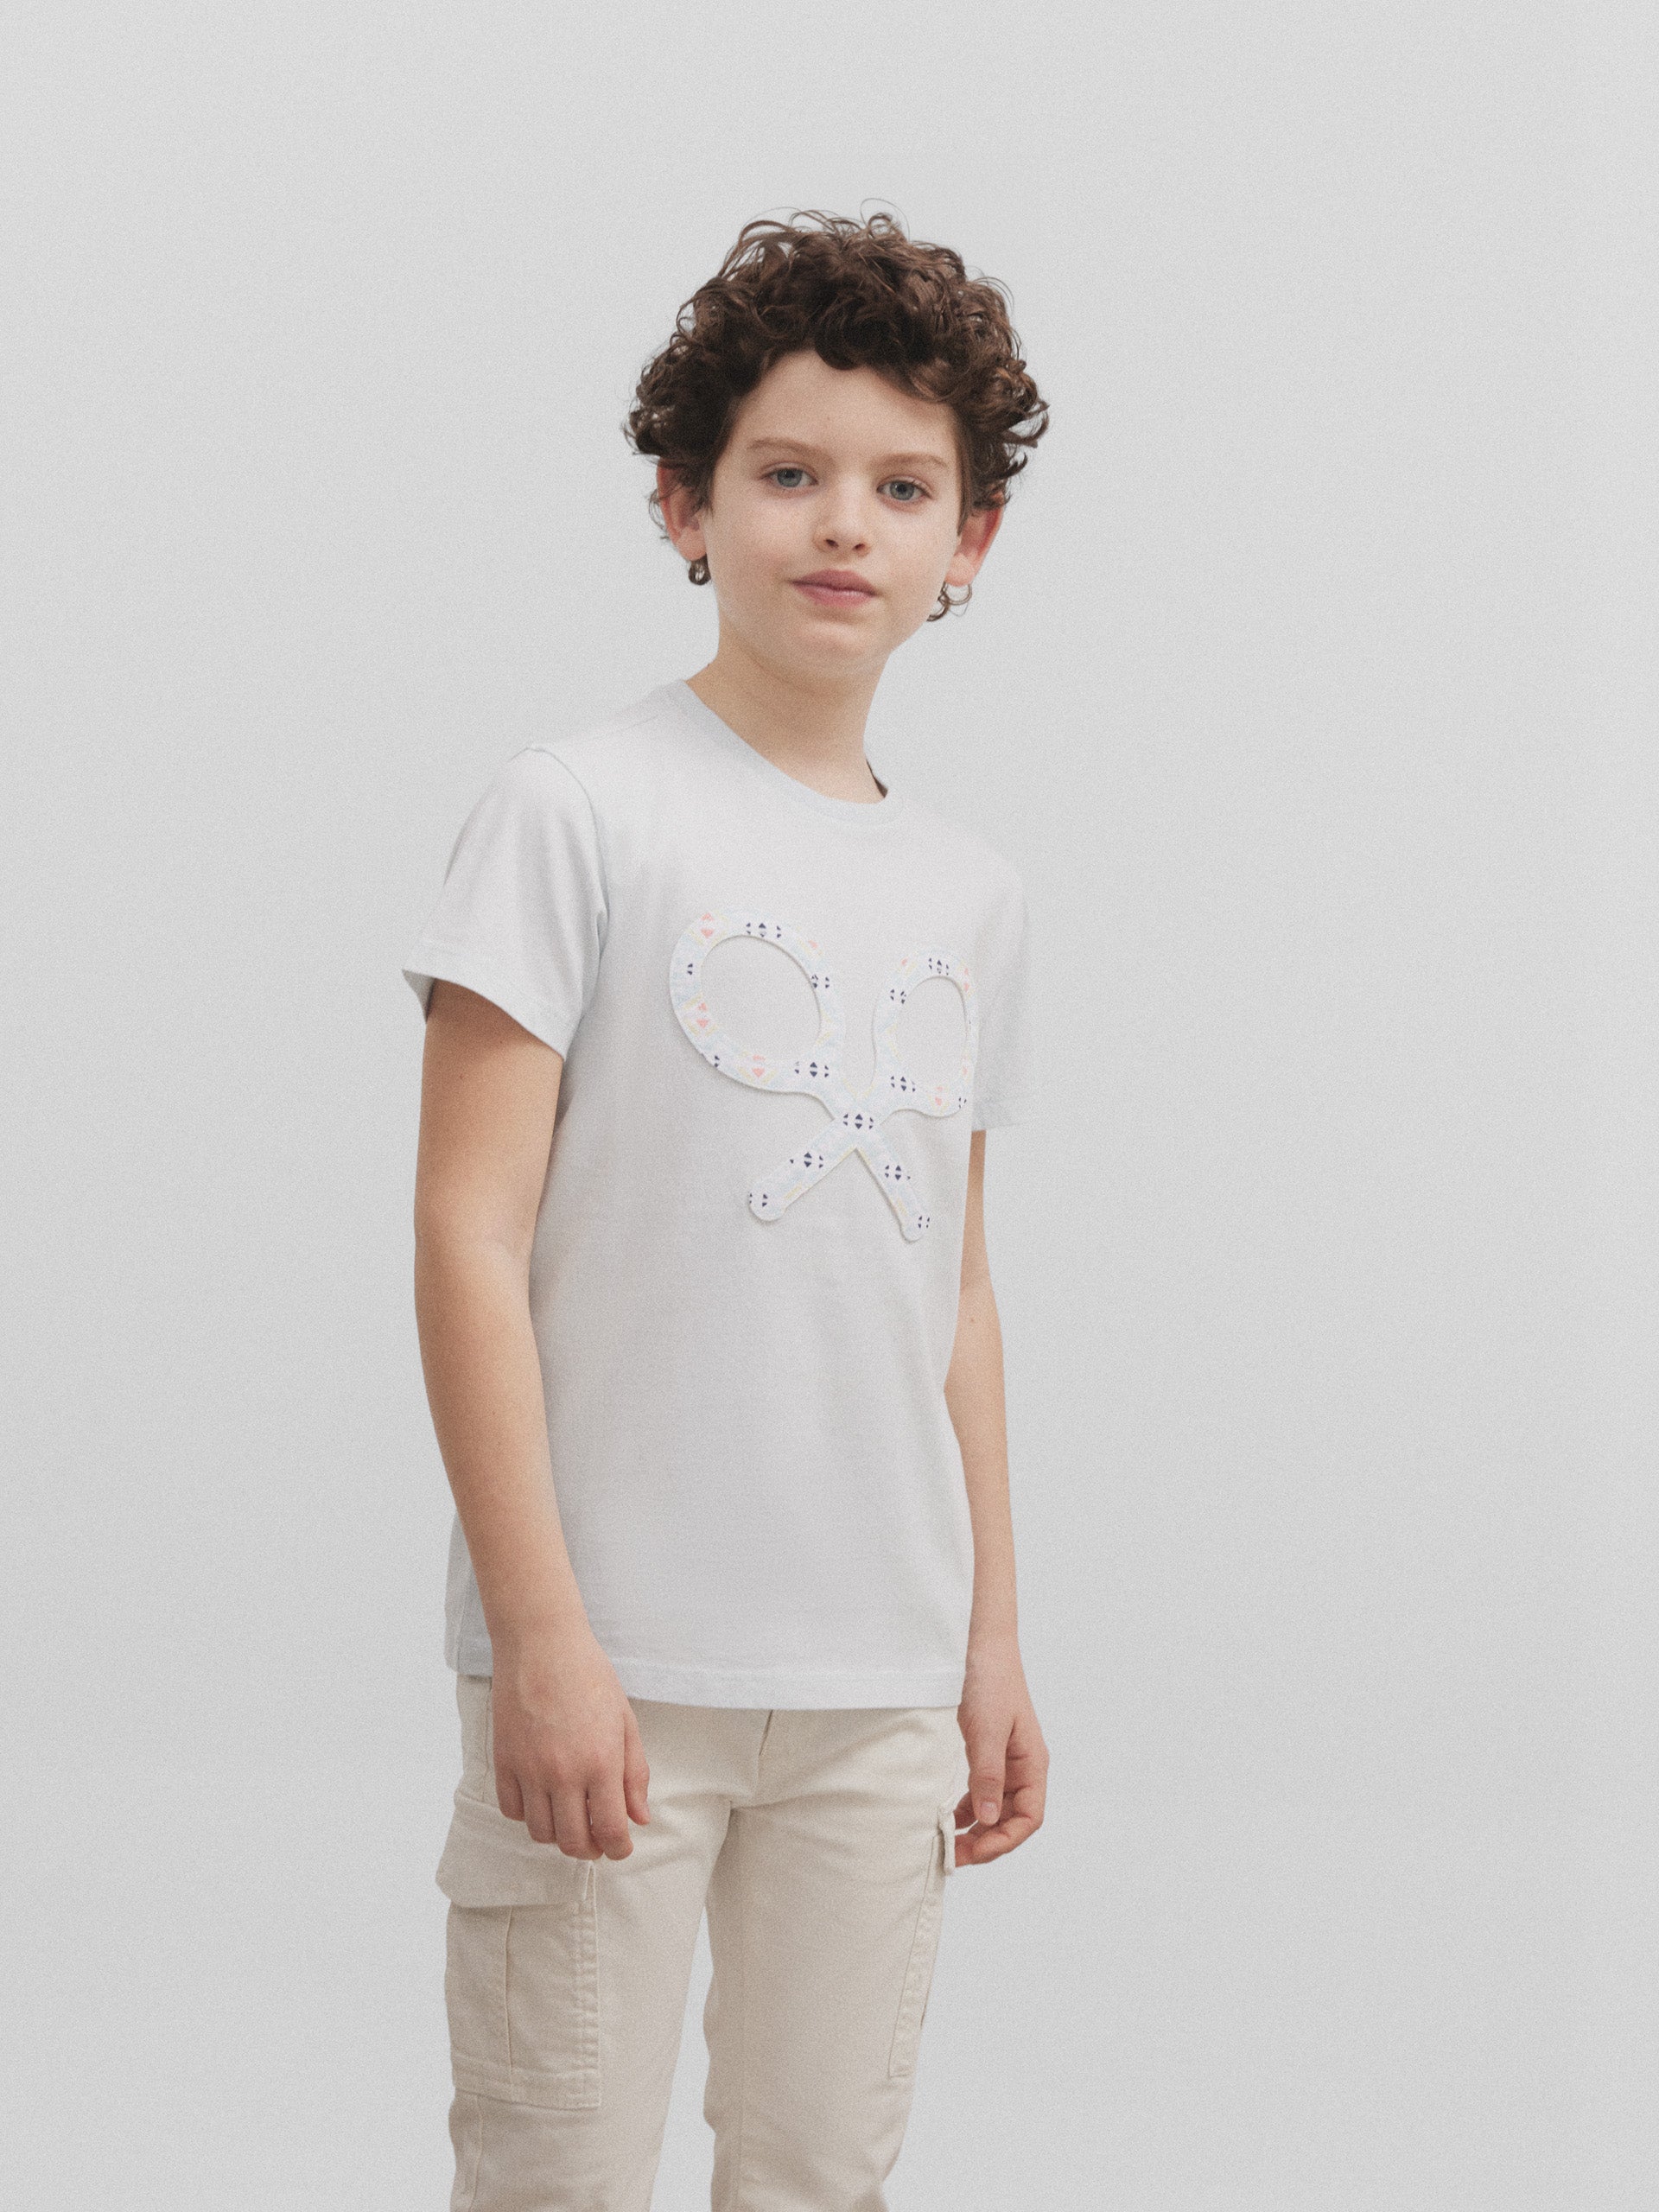 Camiseta blanca para niño, Chibi Joker de cuerpo completo para niño a niño  joven, Blanco